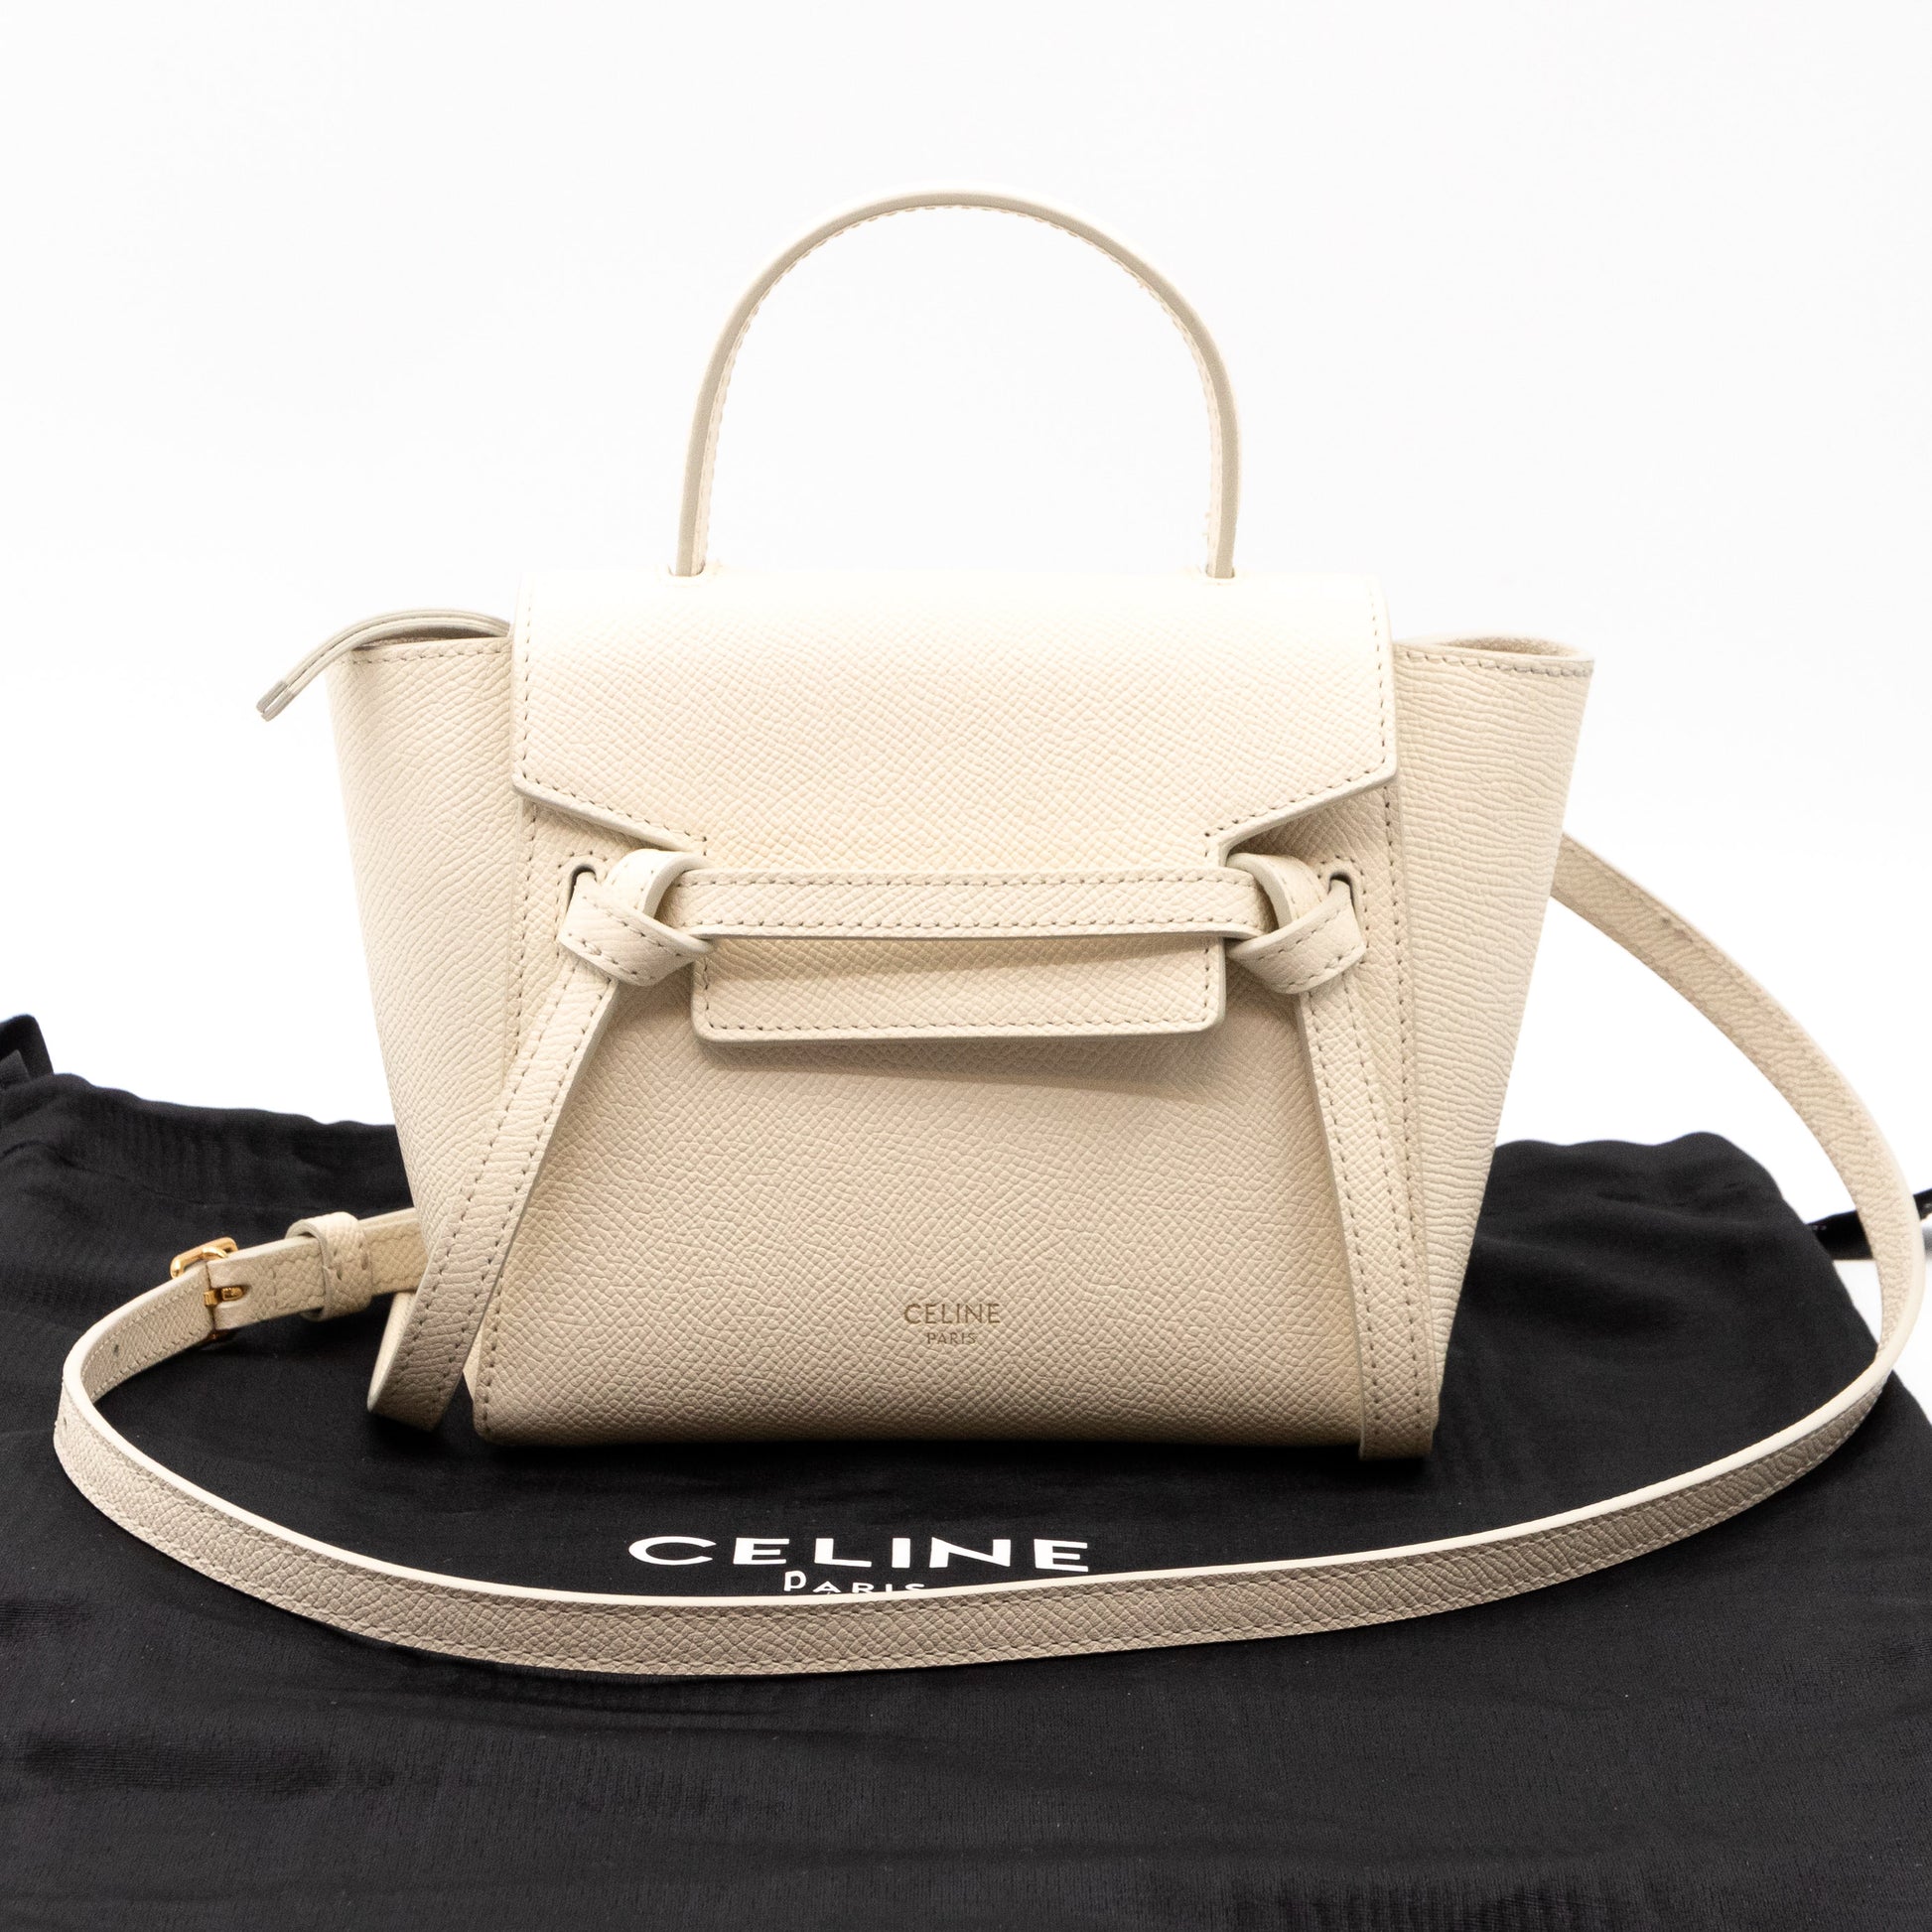 Bag model Pico, in cream leather 15 x 17 cm Good condi…